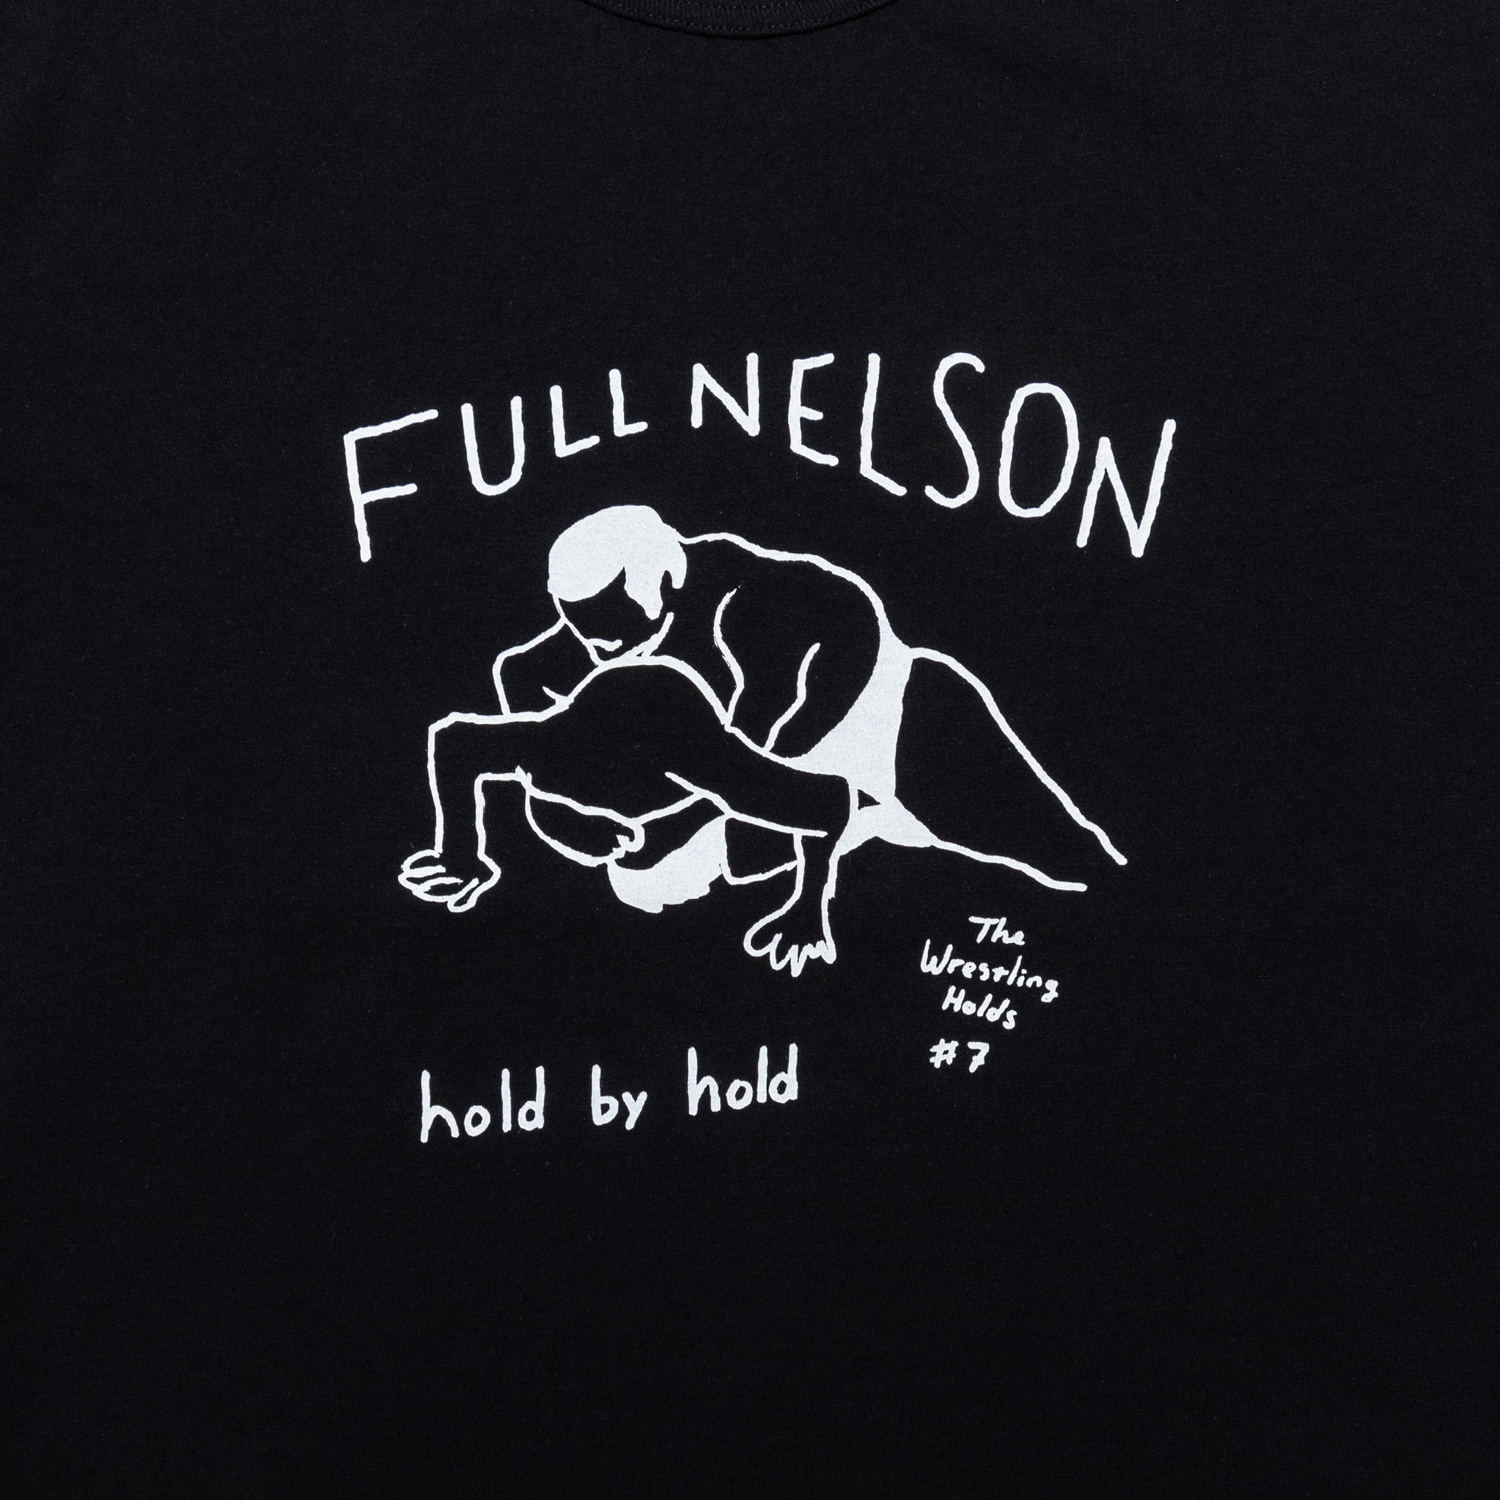 FULL NELSON designed by Tomoo Gokita